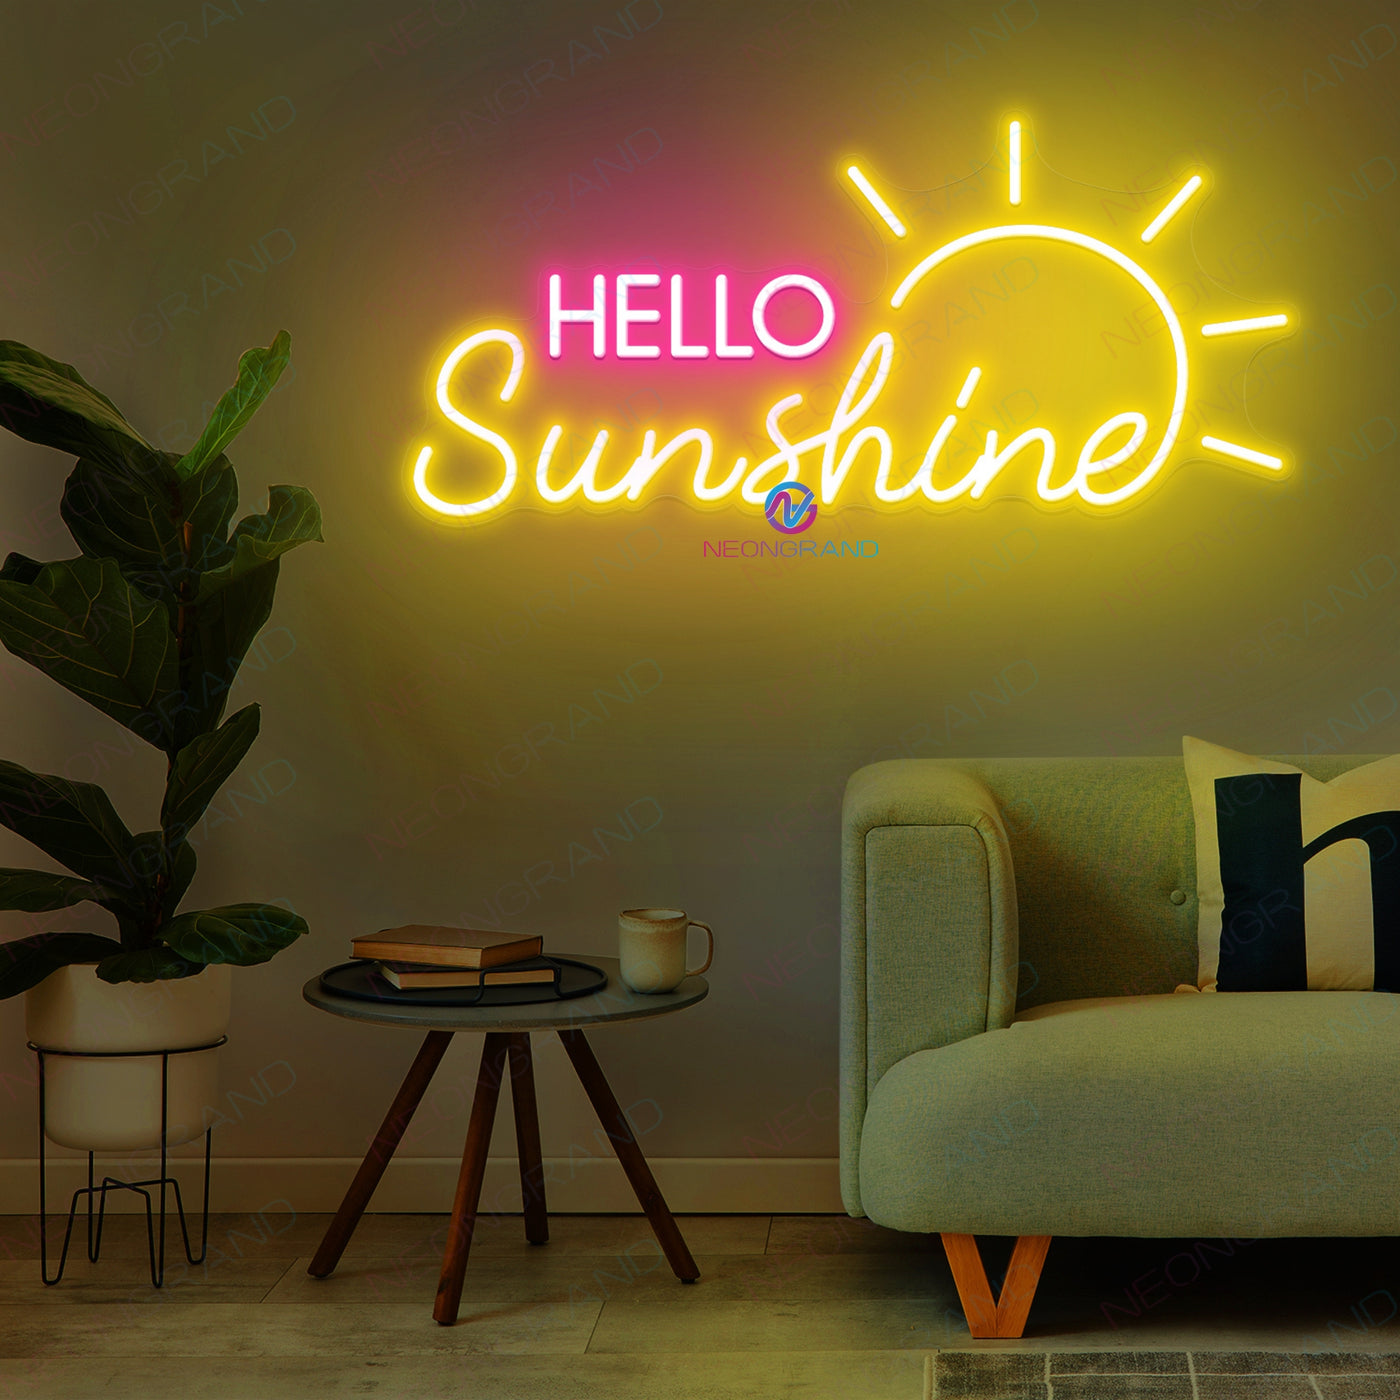 Hello Sunshine Neon Sign Inspirational Led Light